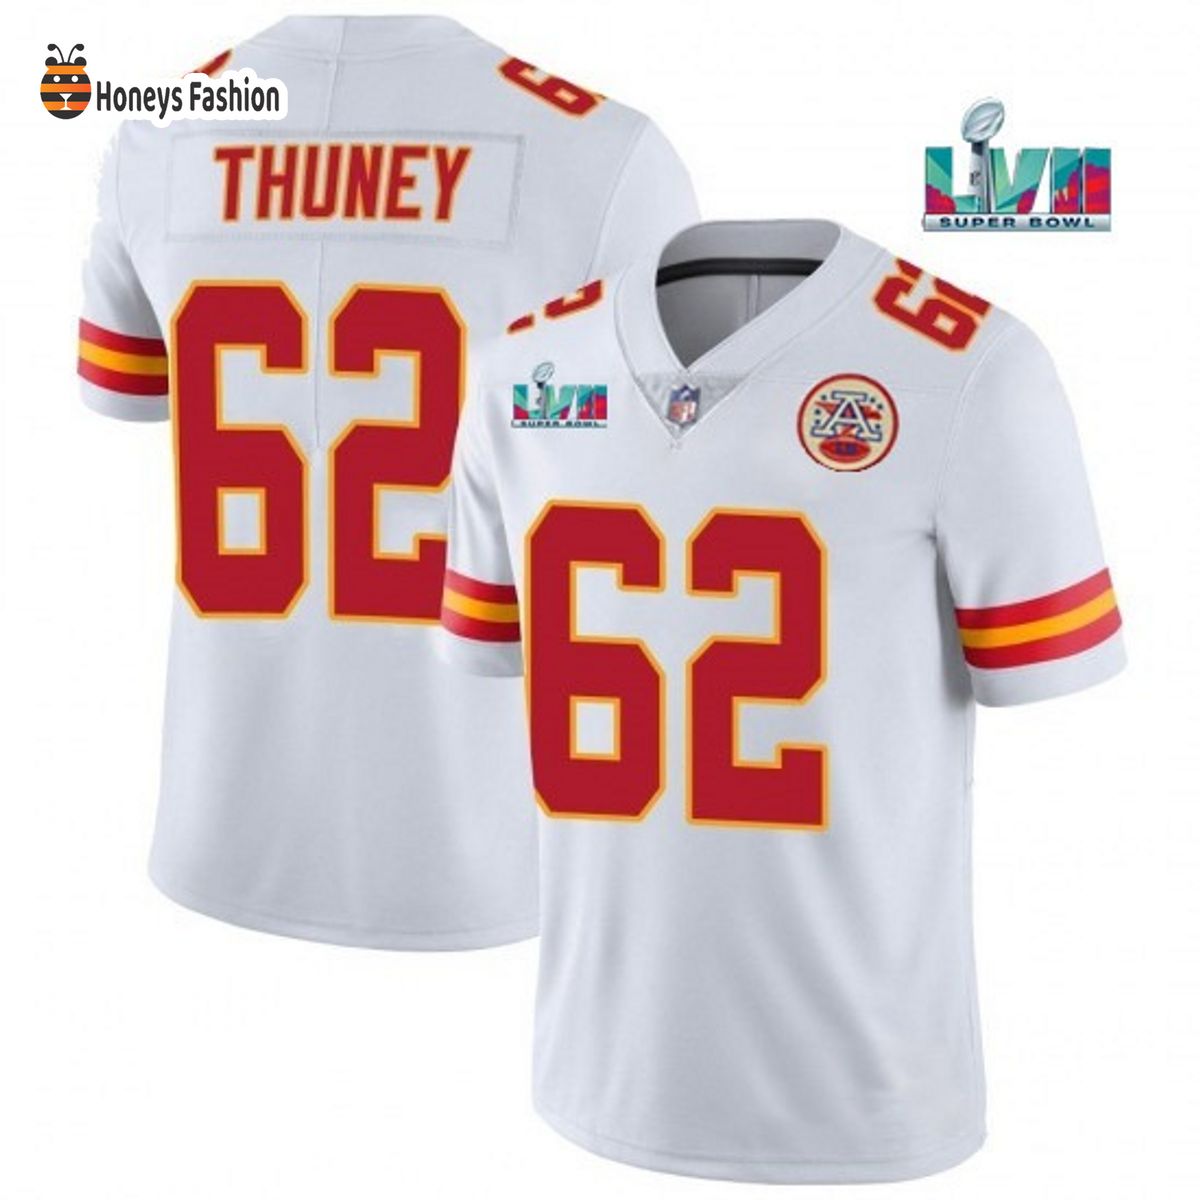 Kansas City Chiefs 62 Joe Thuney White Super Bowl LVII Game Jersey